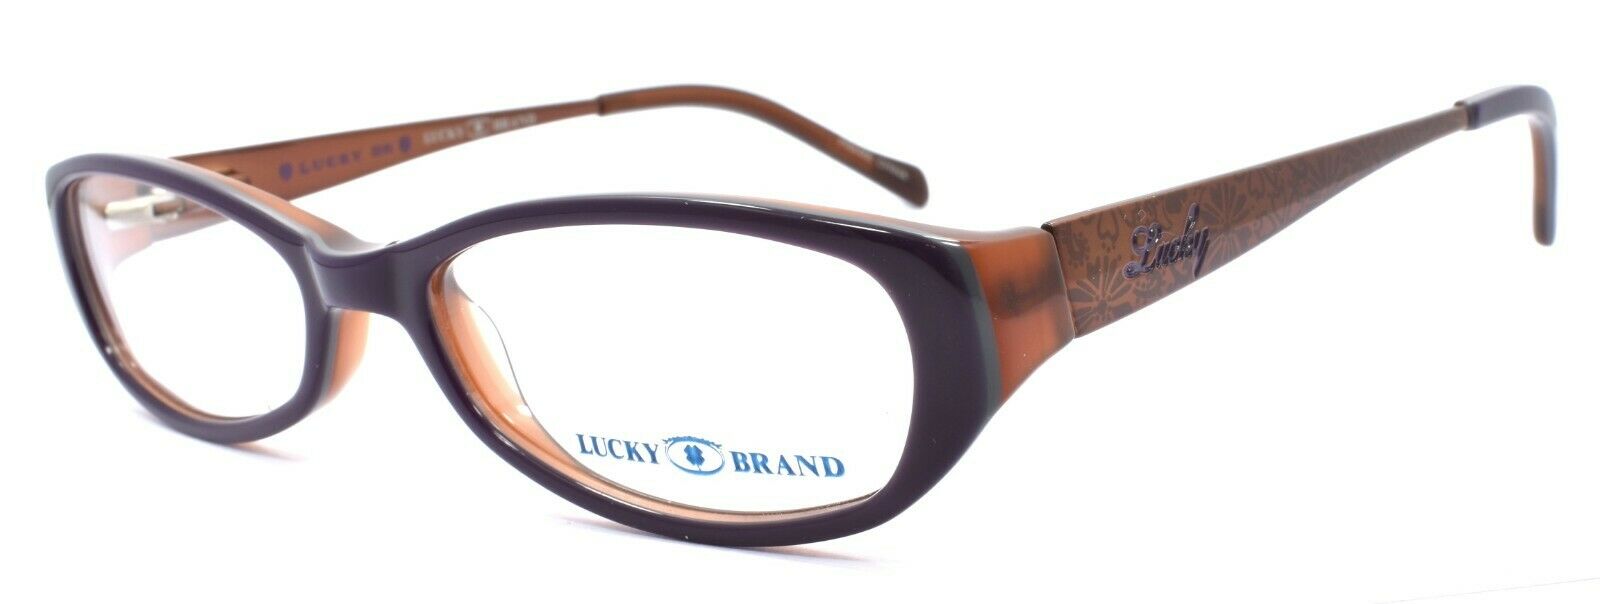 1-LUCKY BRAND Beach Trip Kids Girls Eyeglasses Frames 46-15-130 Purple + CASE-751286214932-IKSpecs